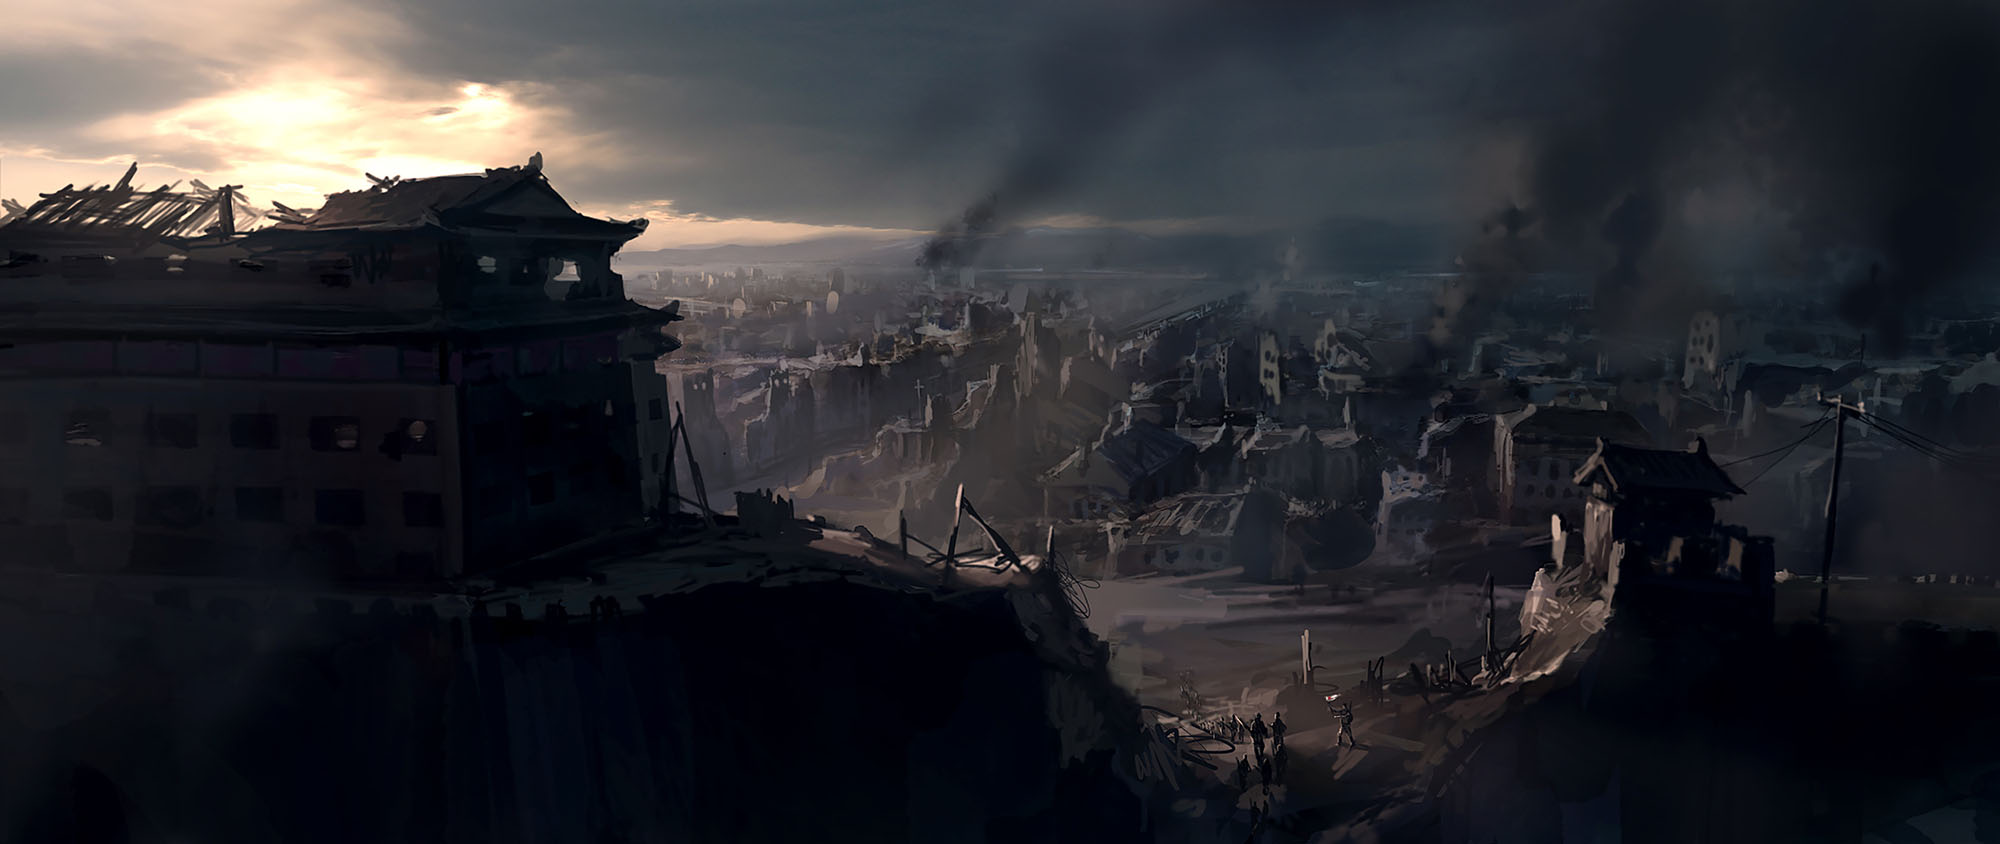 The Destroyed City - Liu Zishan